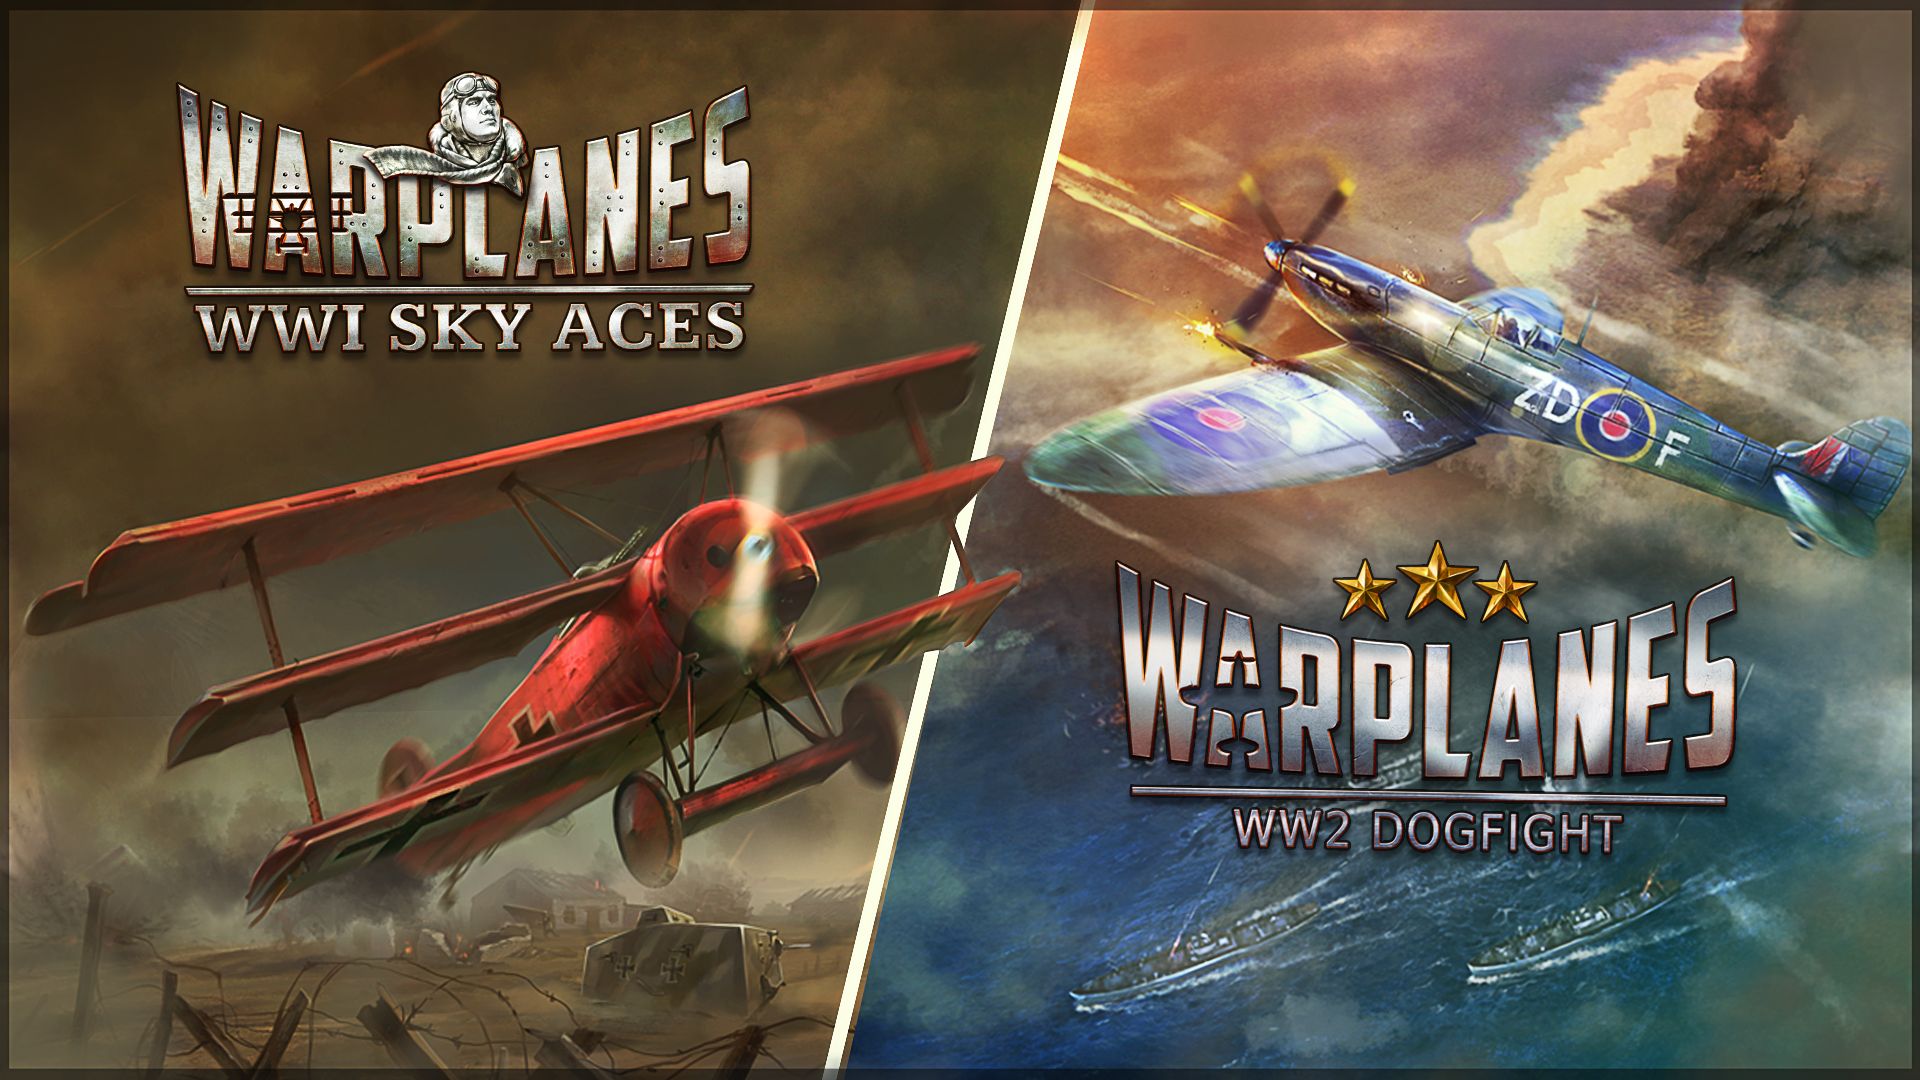 Warplanes ww2 Dogfight. Warplanes: ww1 Sky Aces. Мир самолетов World of warplanes. Warplanes ww1 Dogfight. Игра warplanes ww2 dogfight